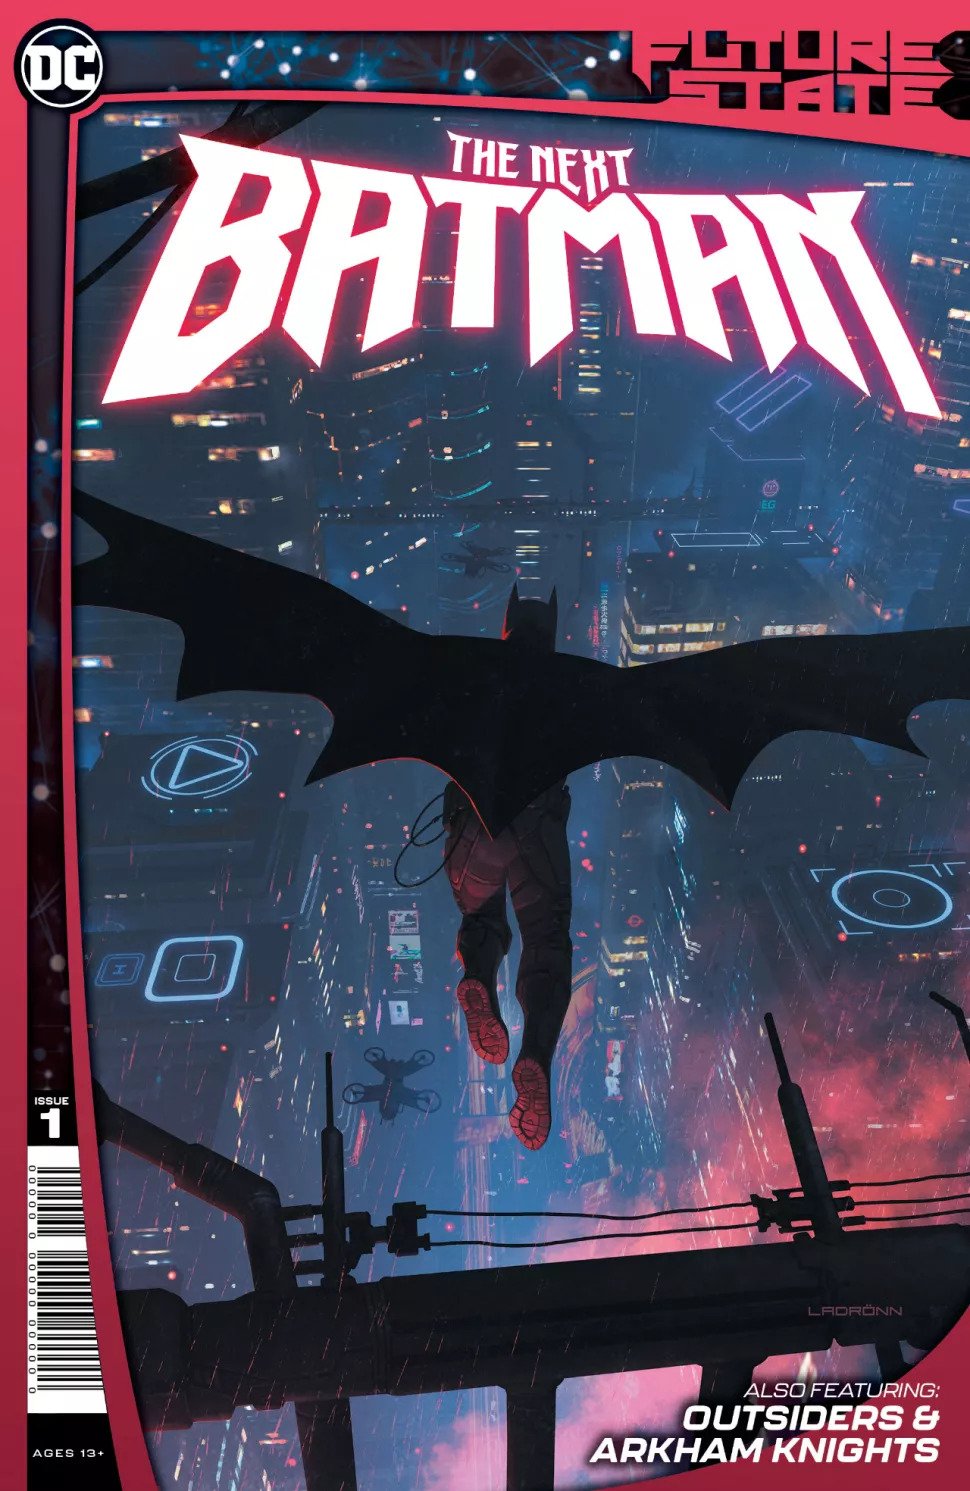 The next Batman leaps from a high perch into the futuristic sky of Gotham City. Cover art by José Ladrönn.